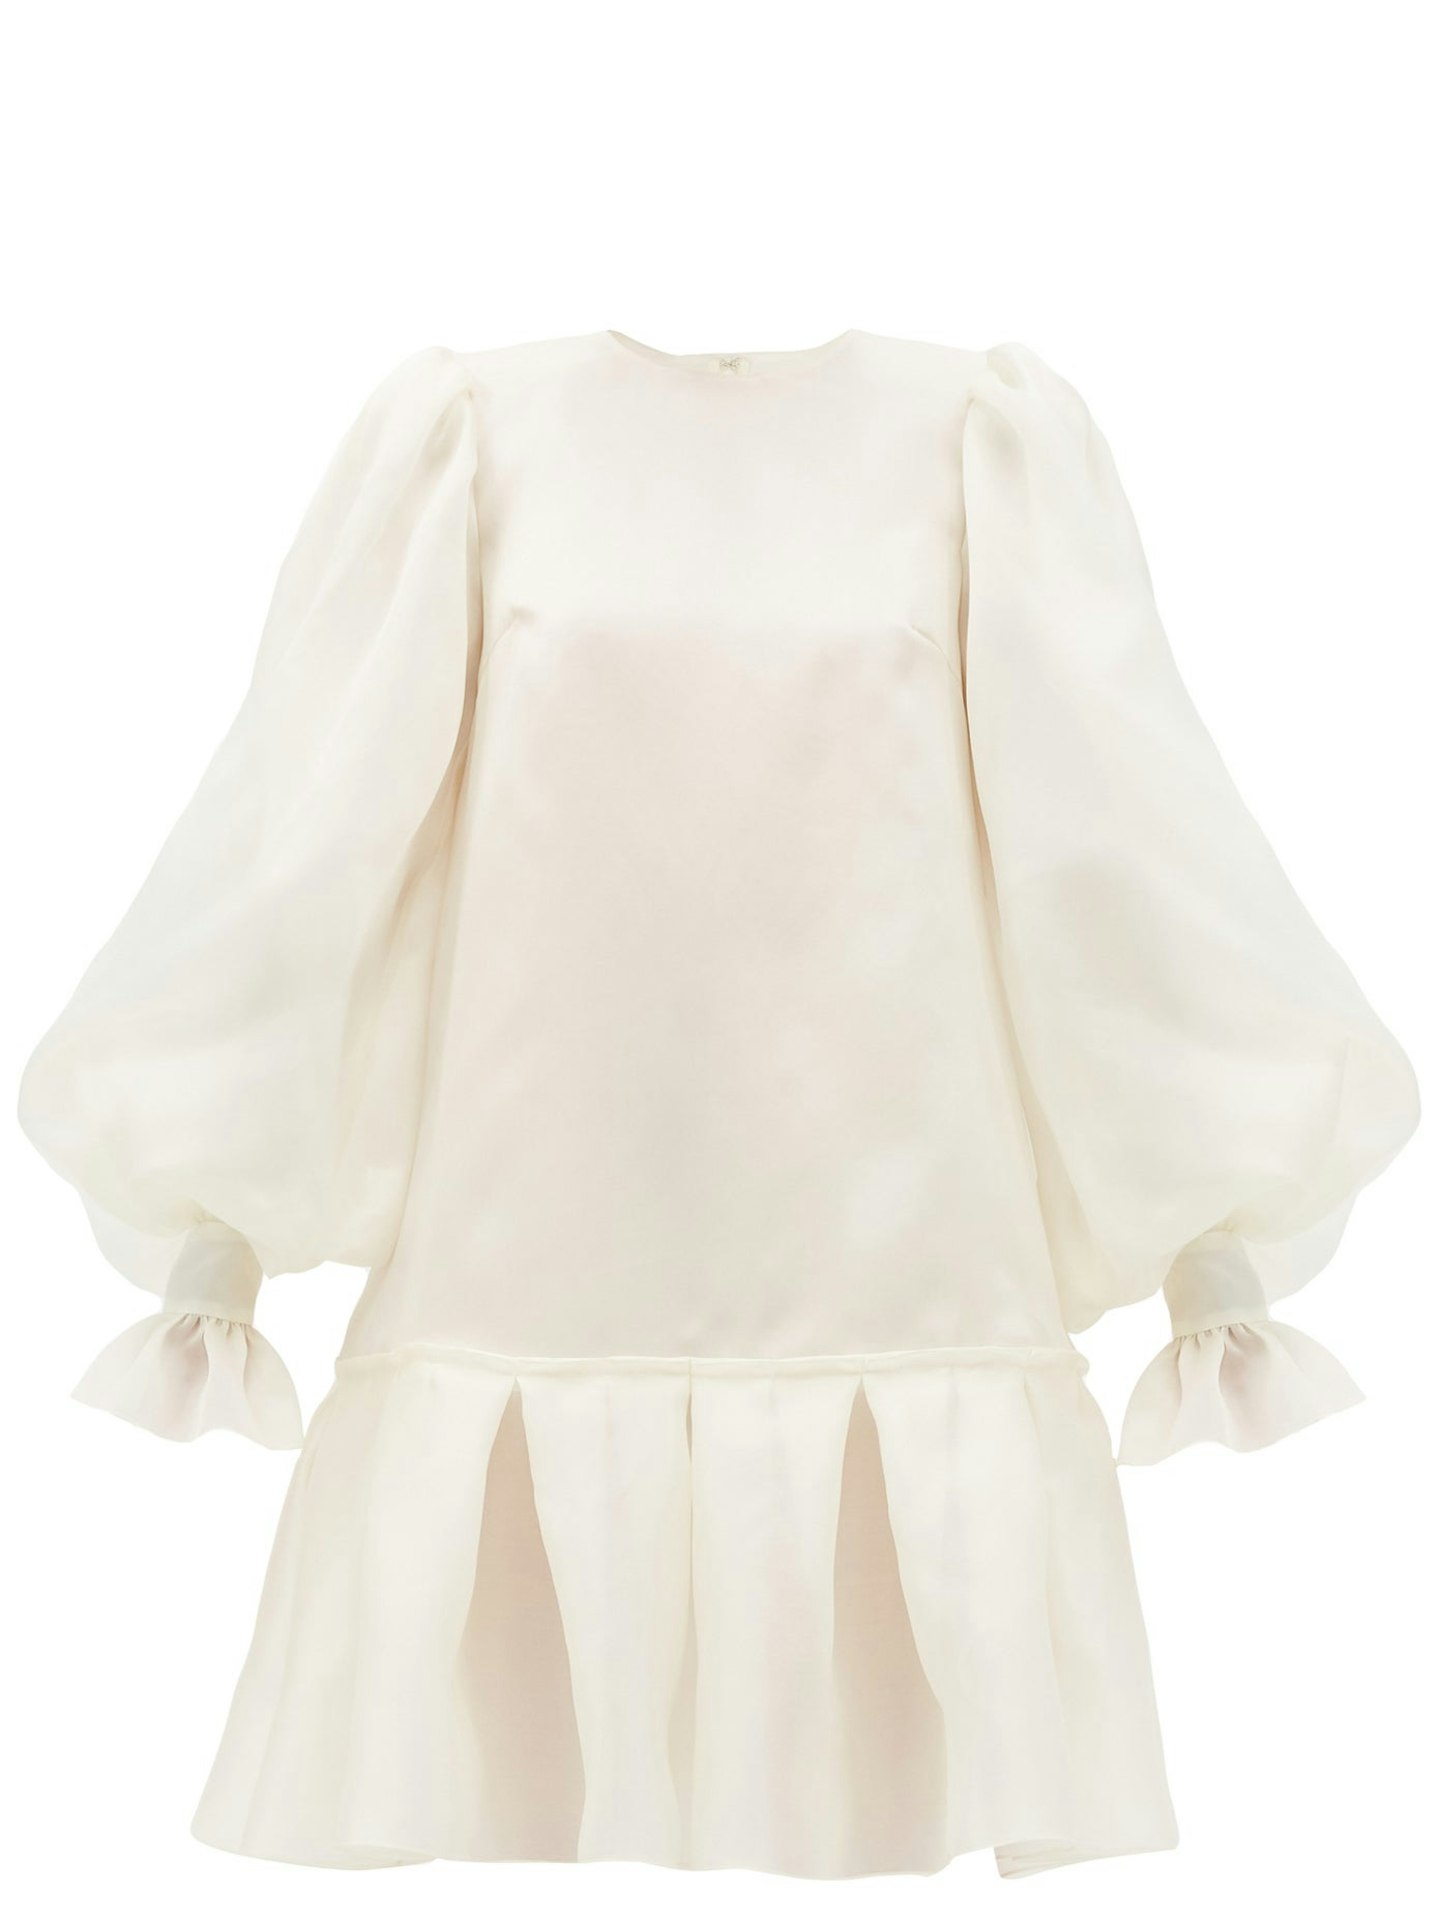 Giles, Kristen Balloon-Sleeved Silk-Organza Minidress, £5,090